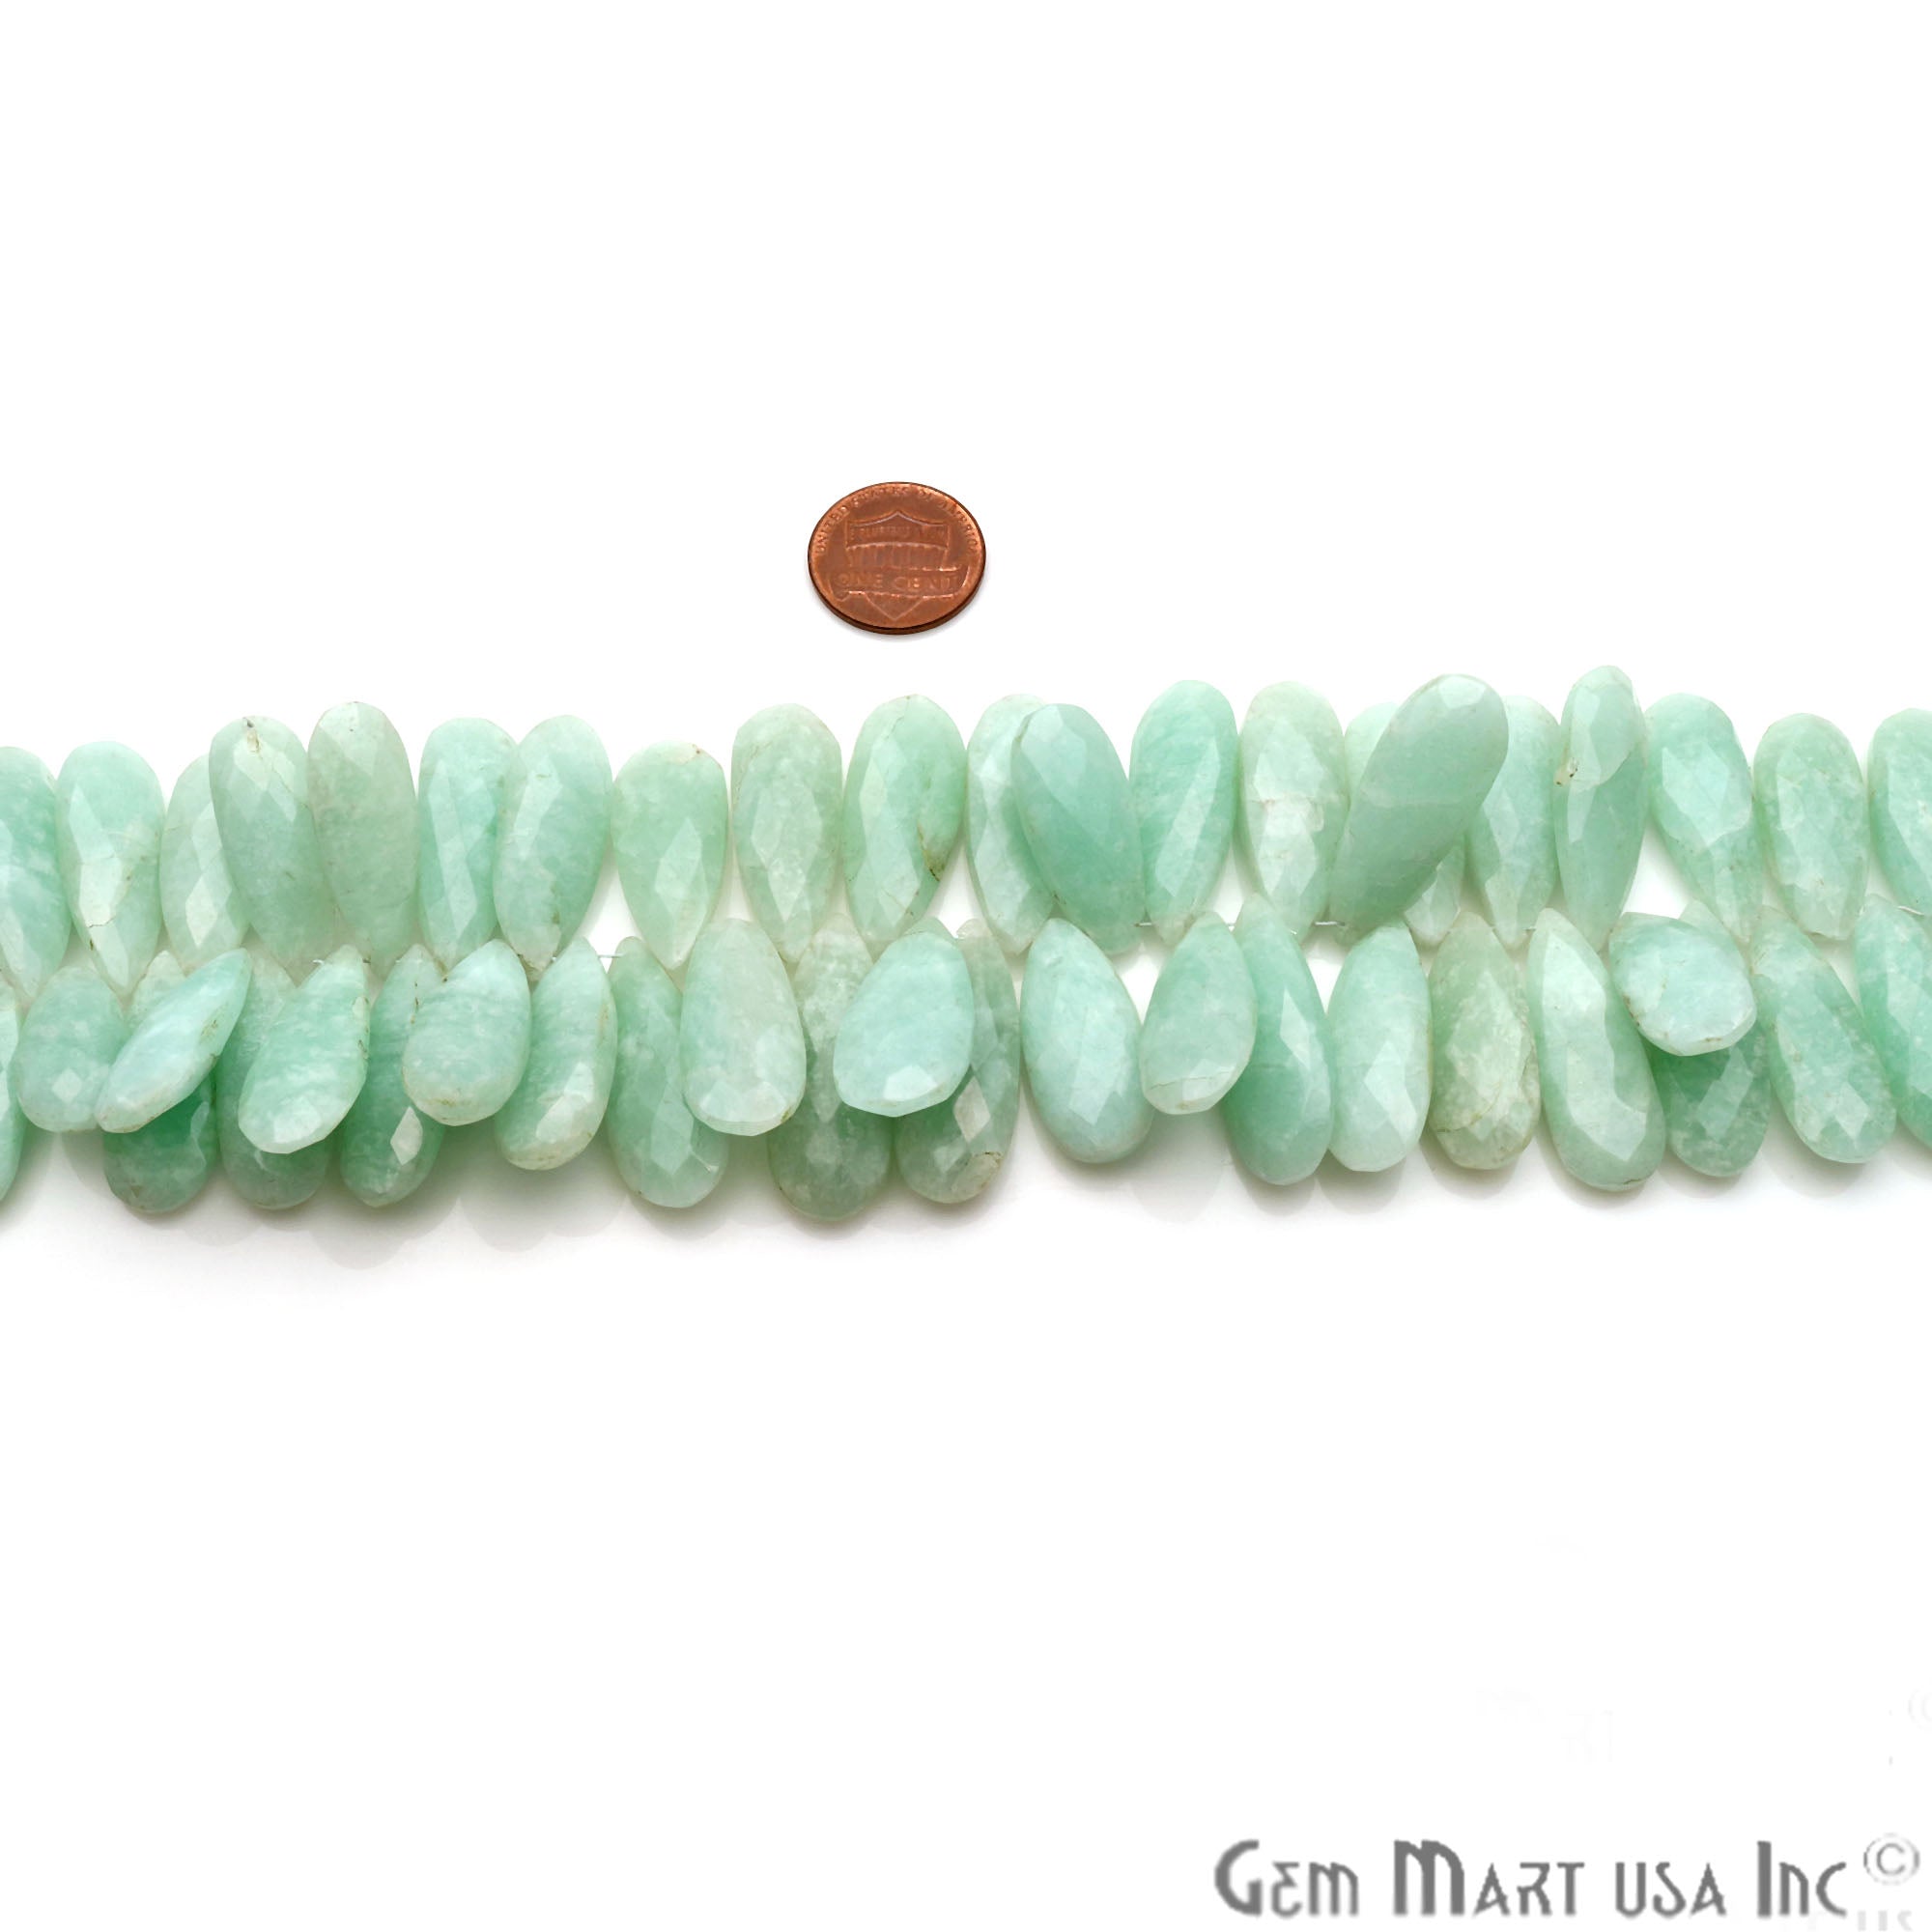 Amazonite Pears 30x12mm Crafting Beads Gemstone Briolette Strands 8 INCH - GemMartUSA